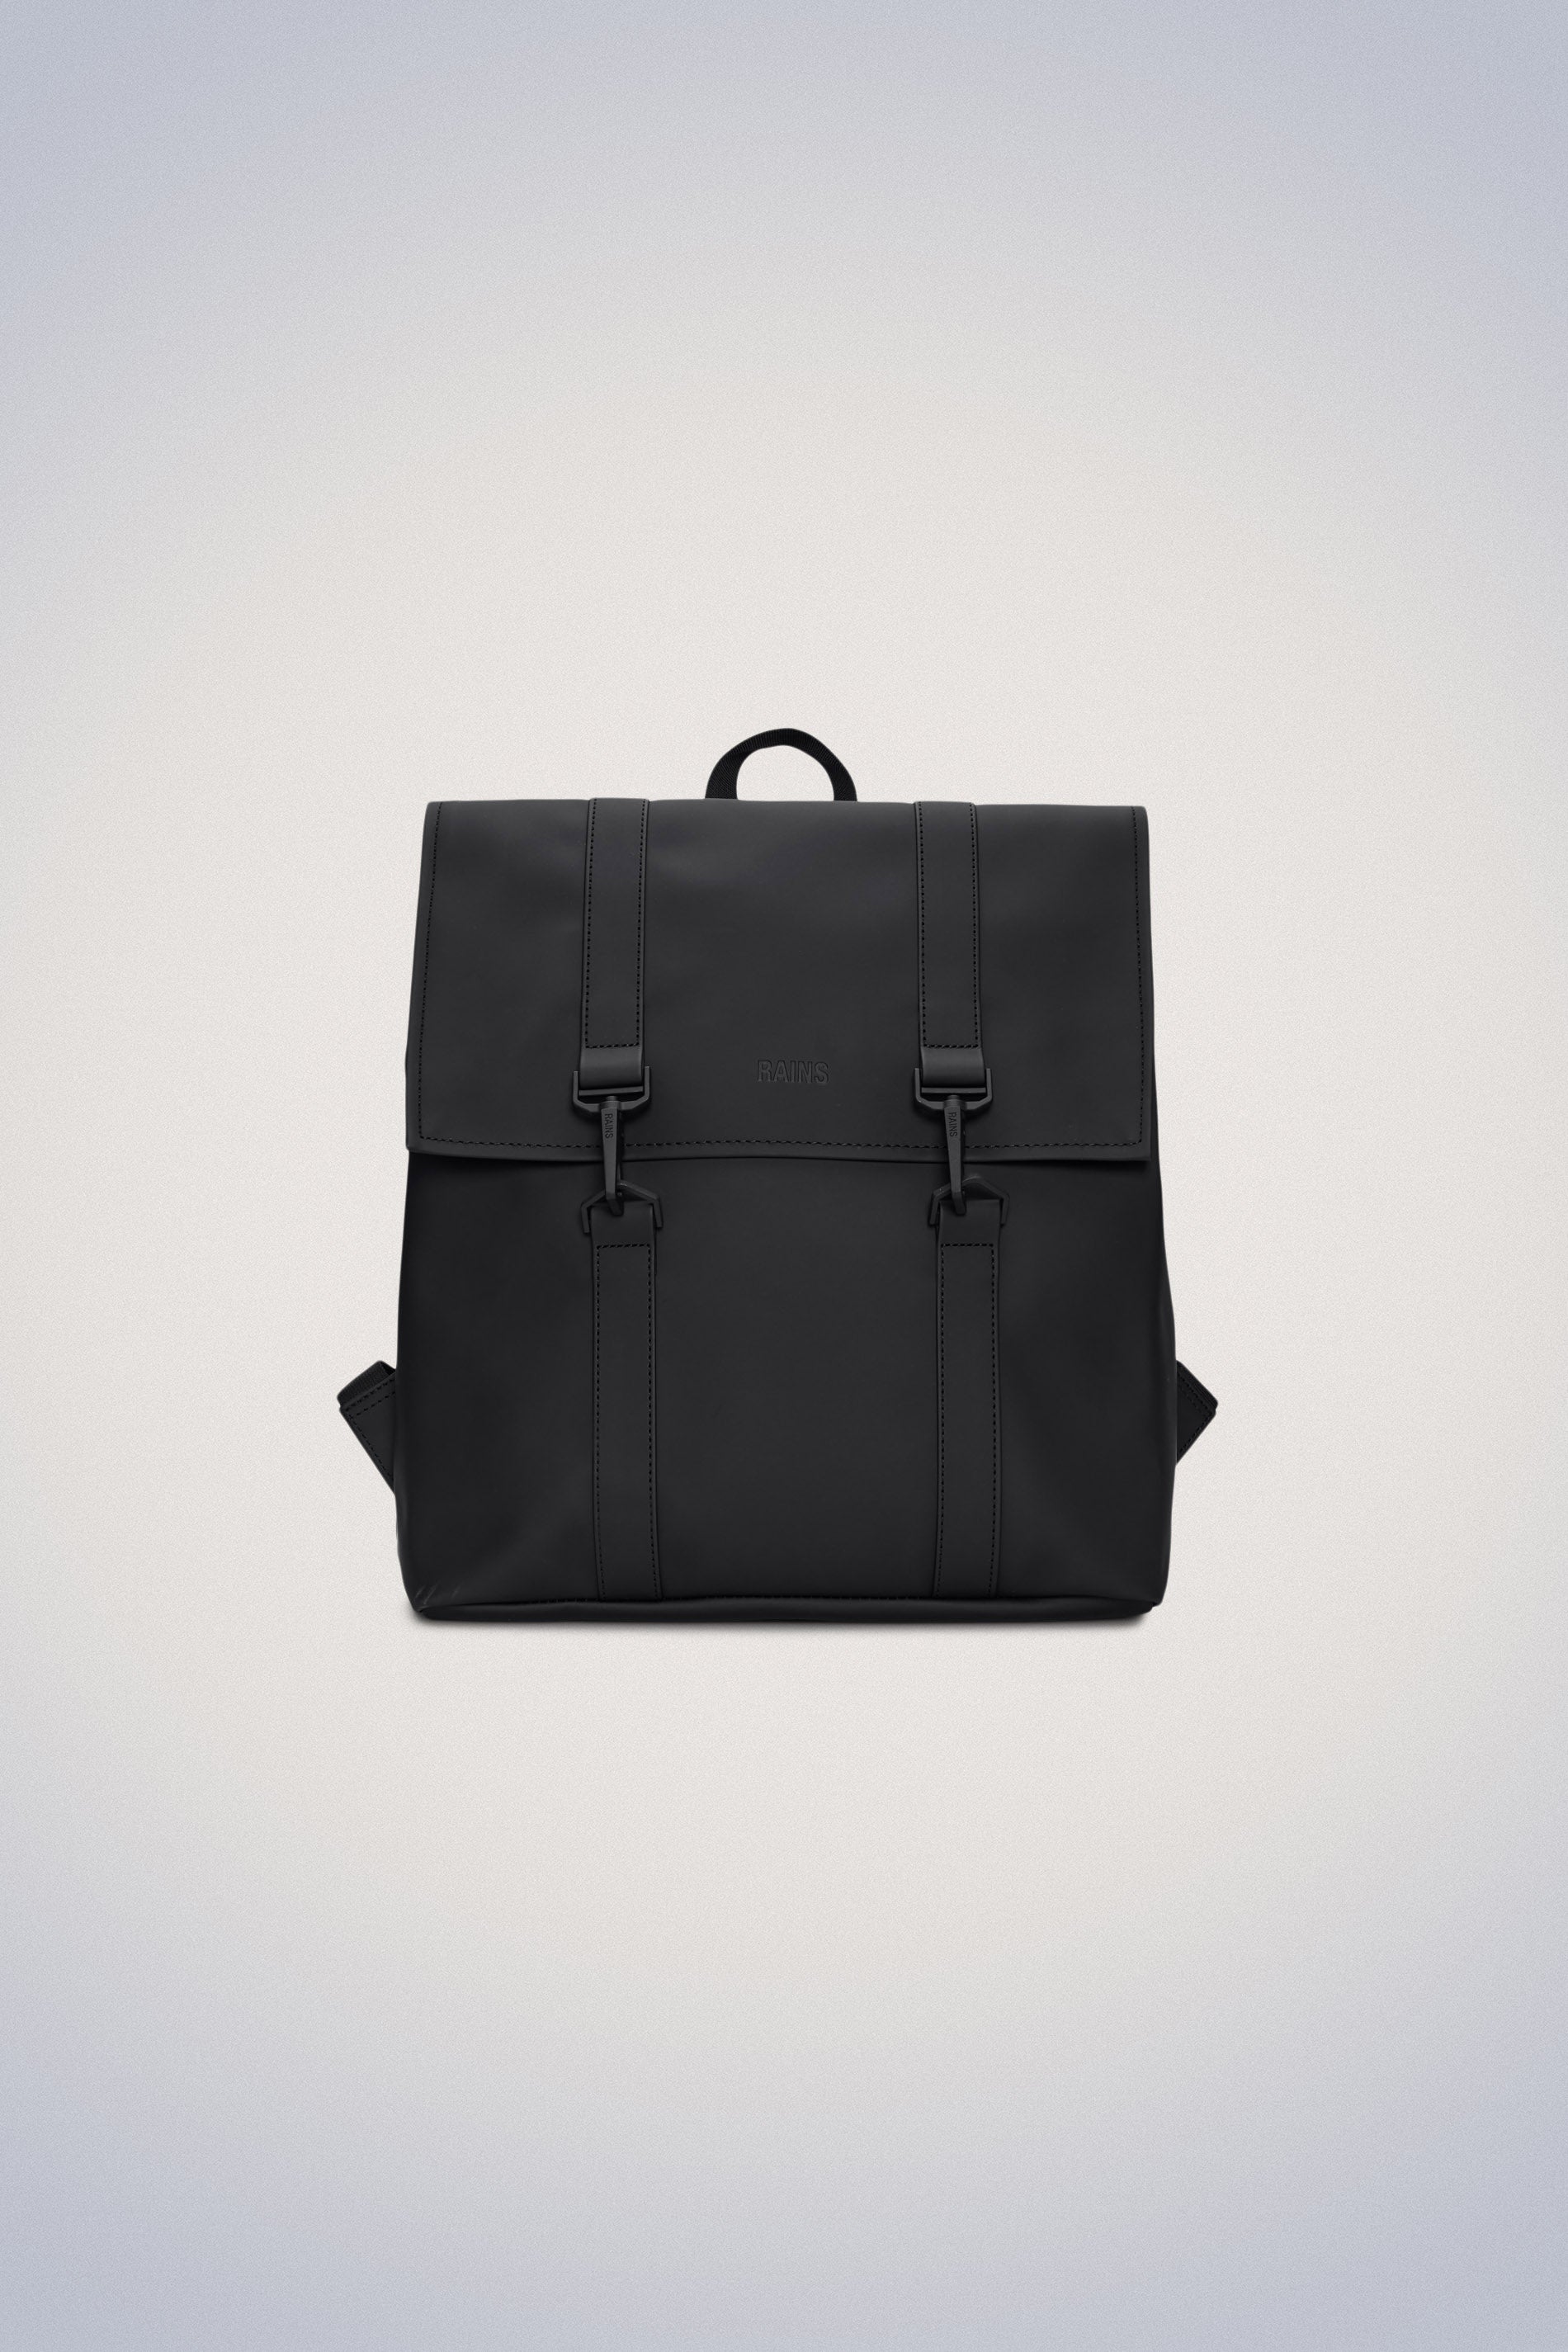 Rains® Backpack Mini in Black for $110